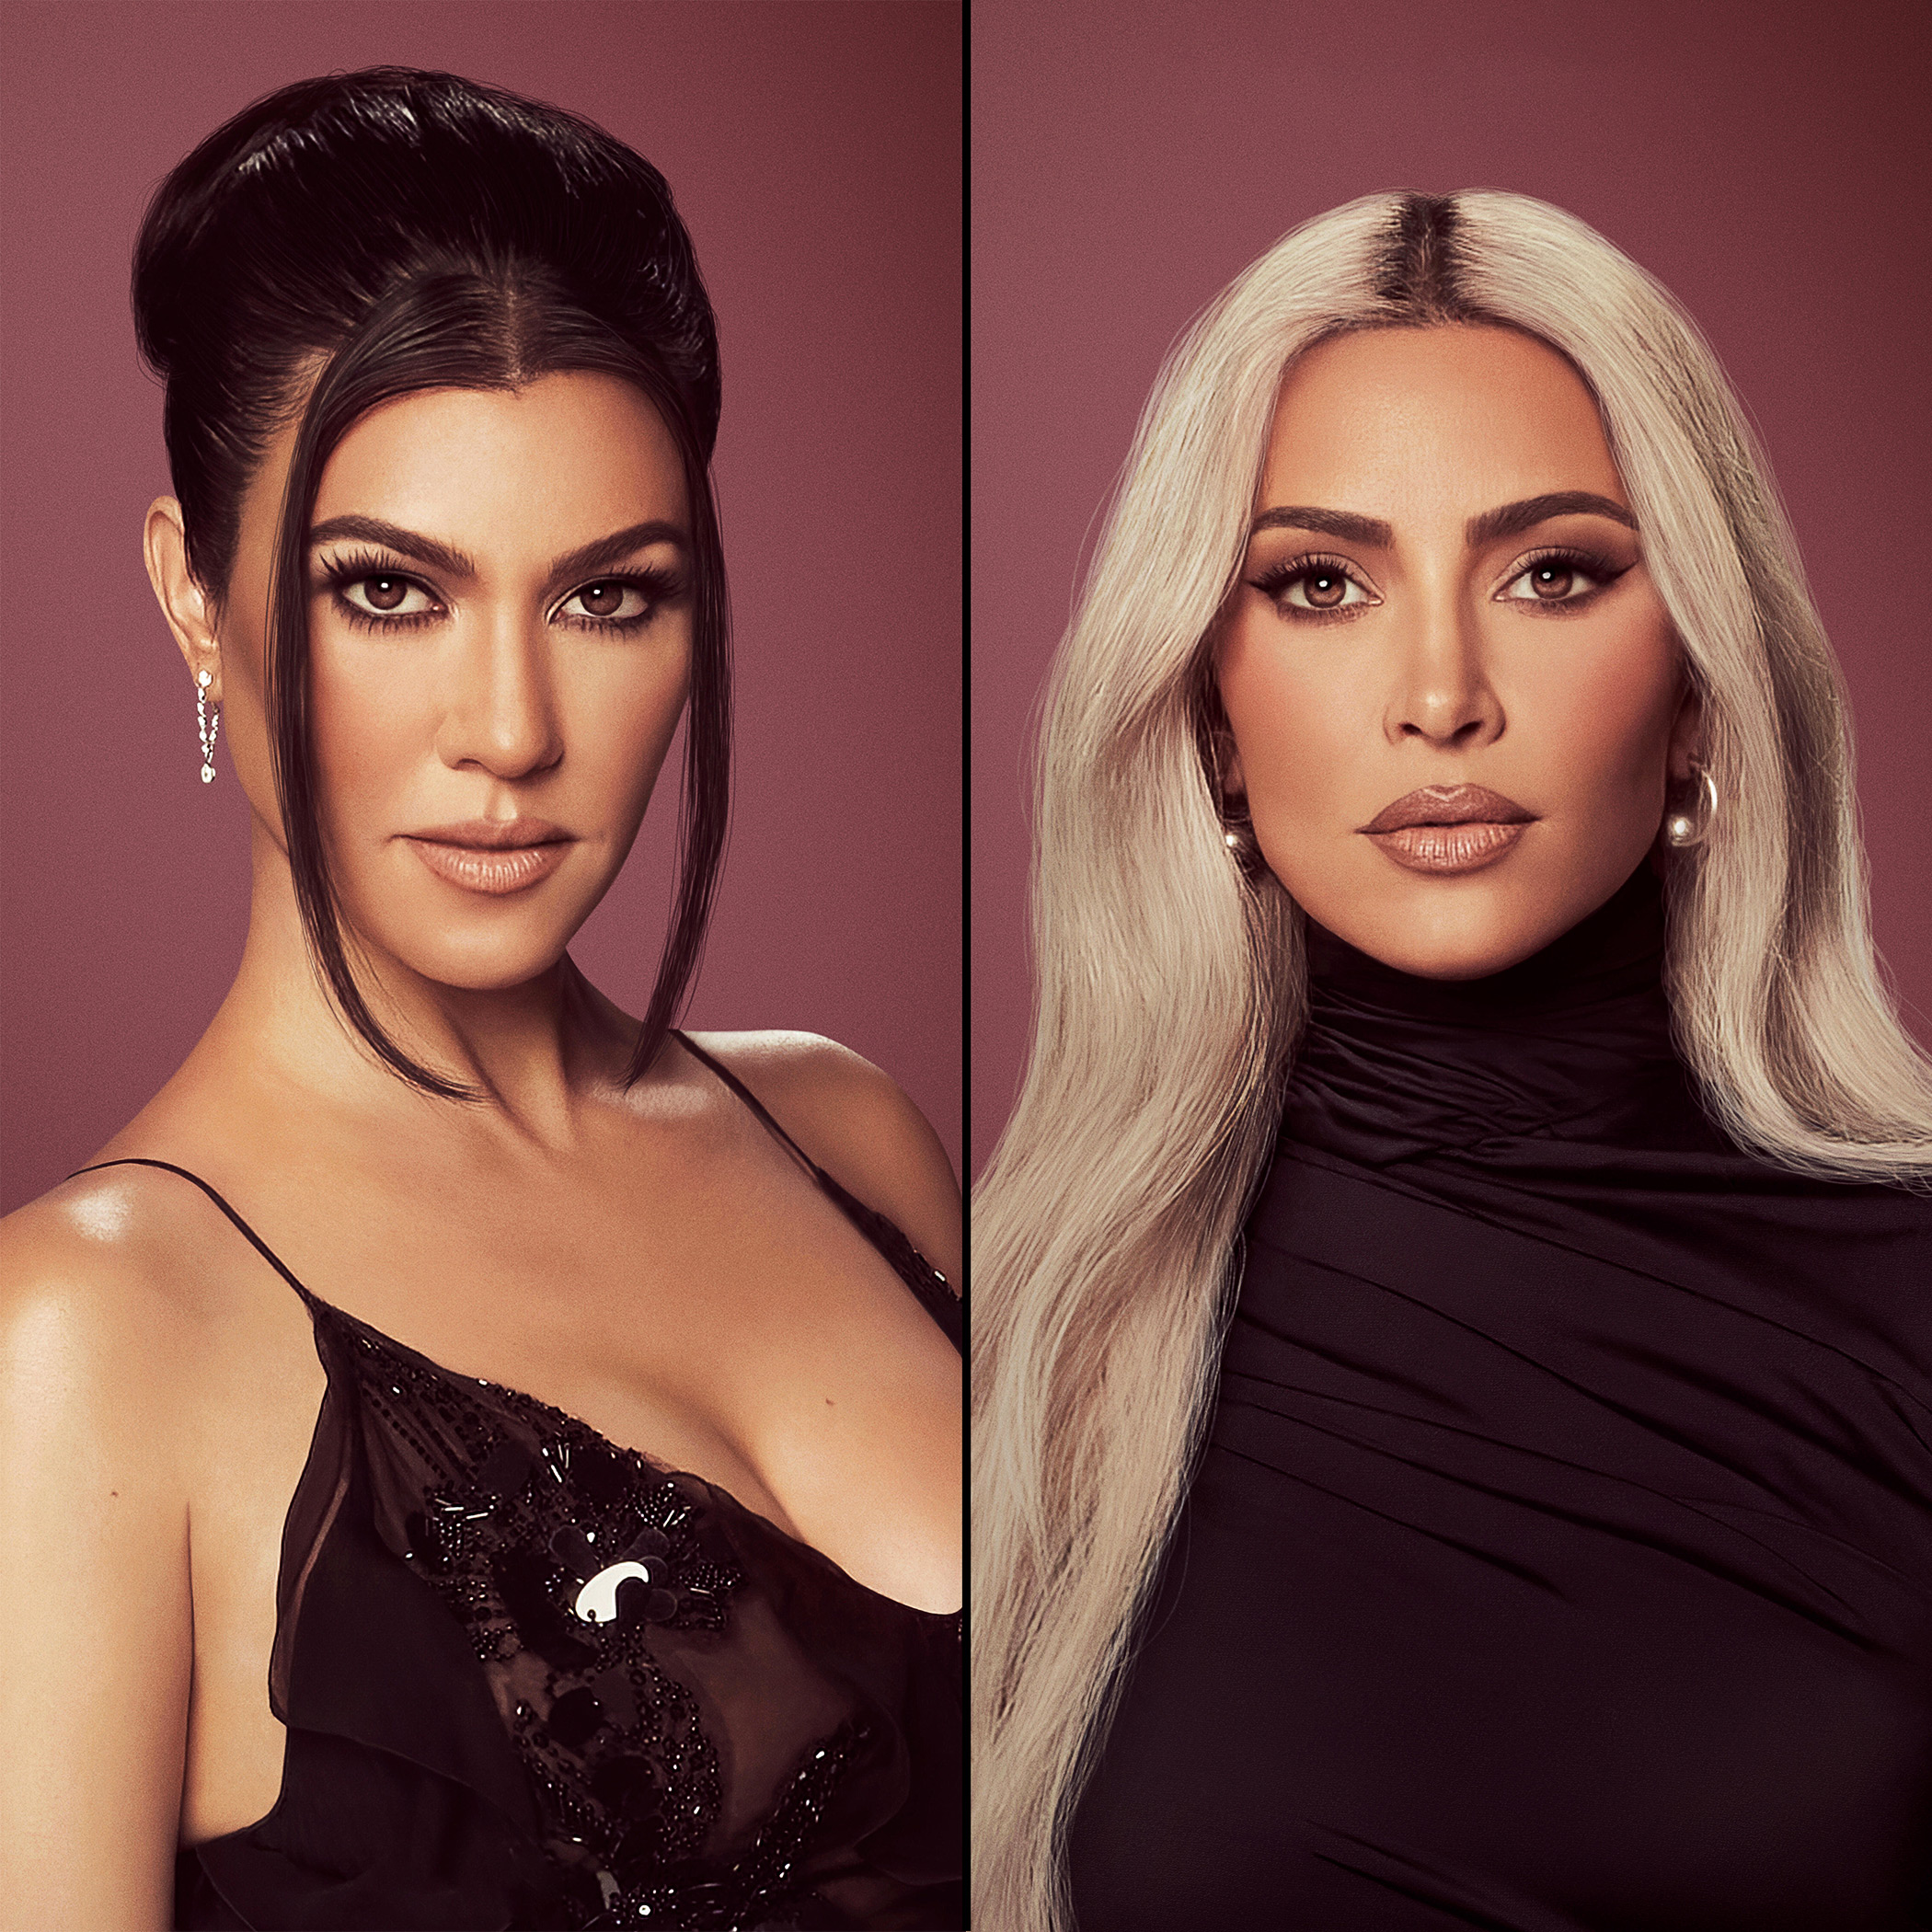 Kardashians' Season 3 Trailer: Kim, Kourtney Kardashian Feud